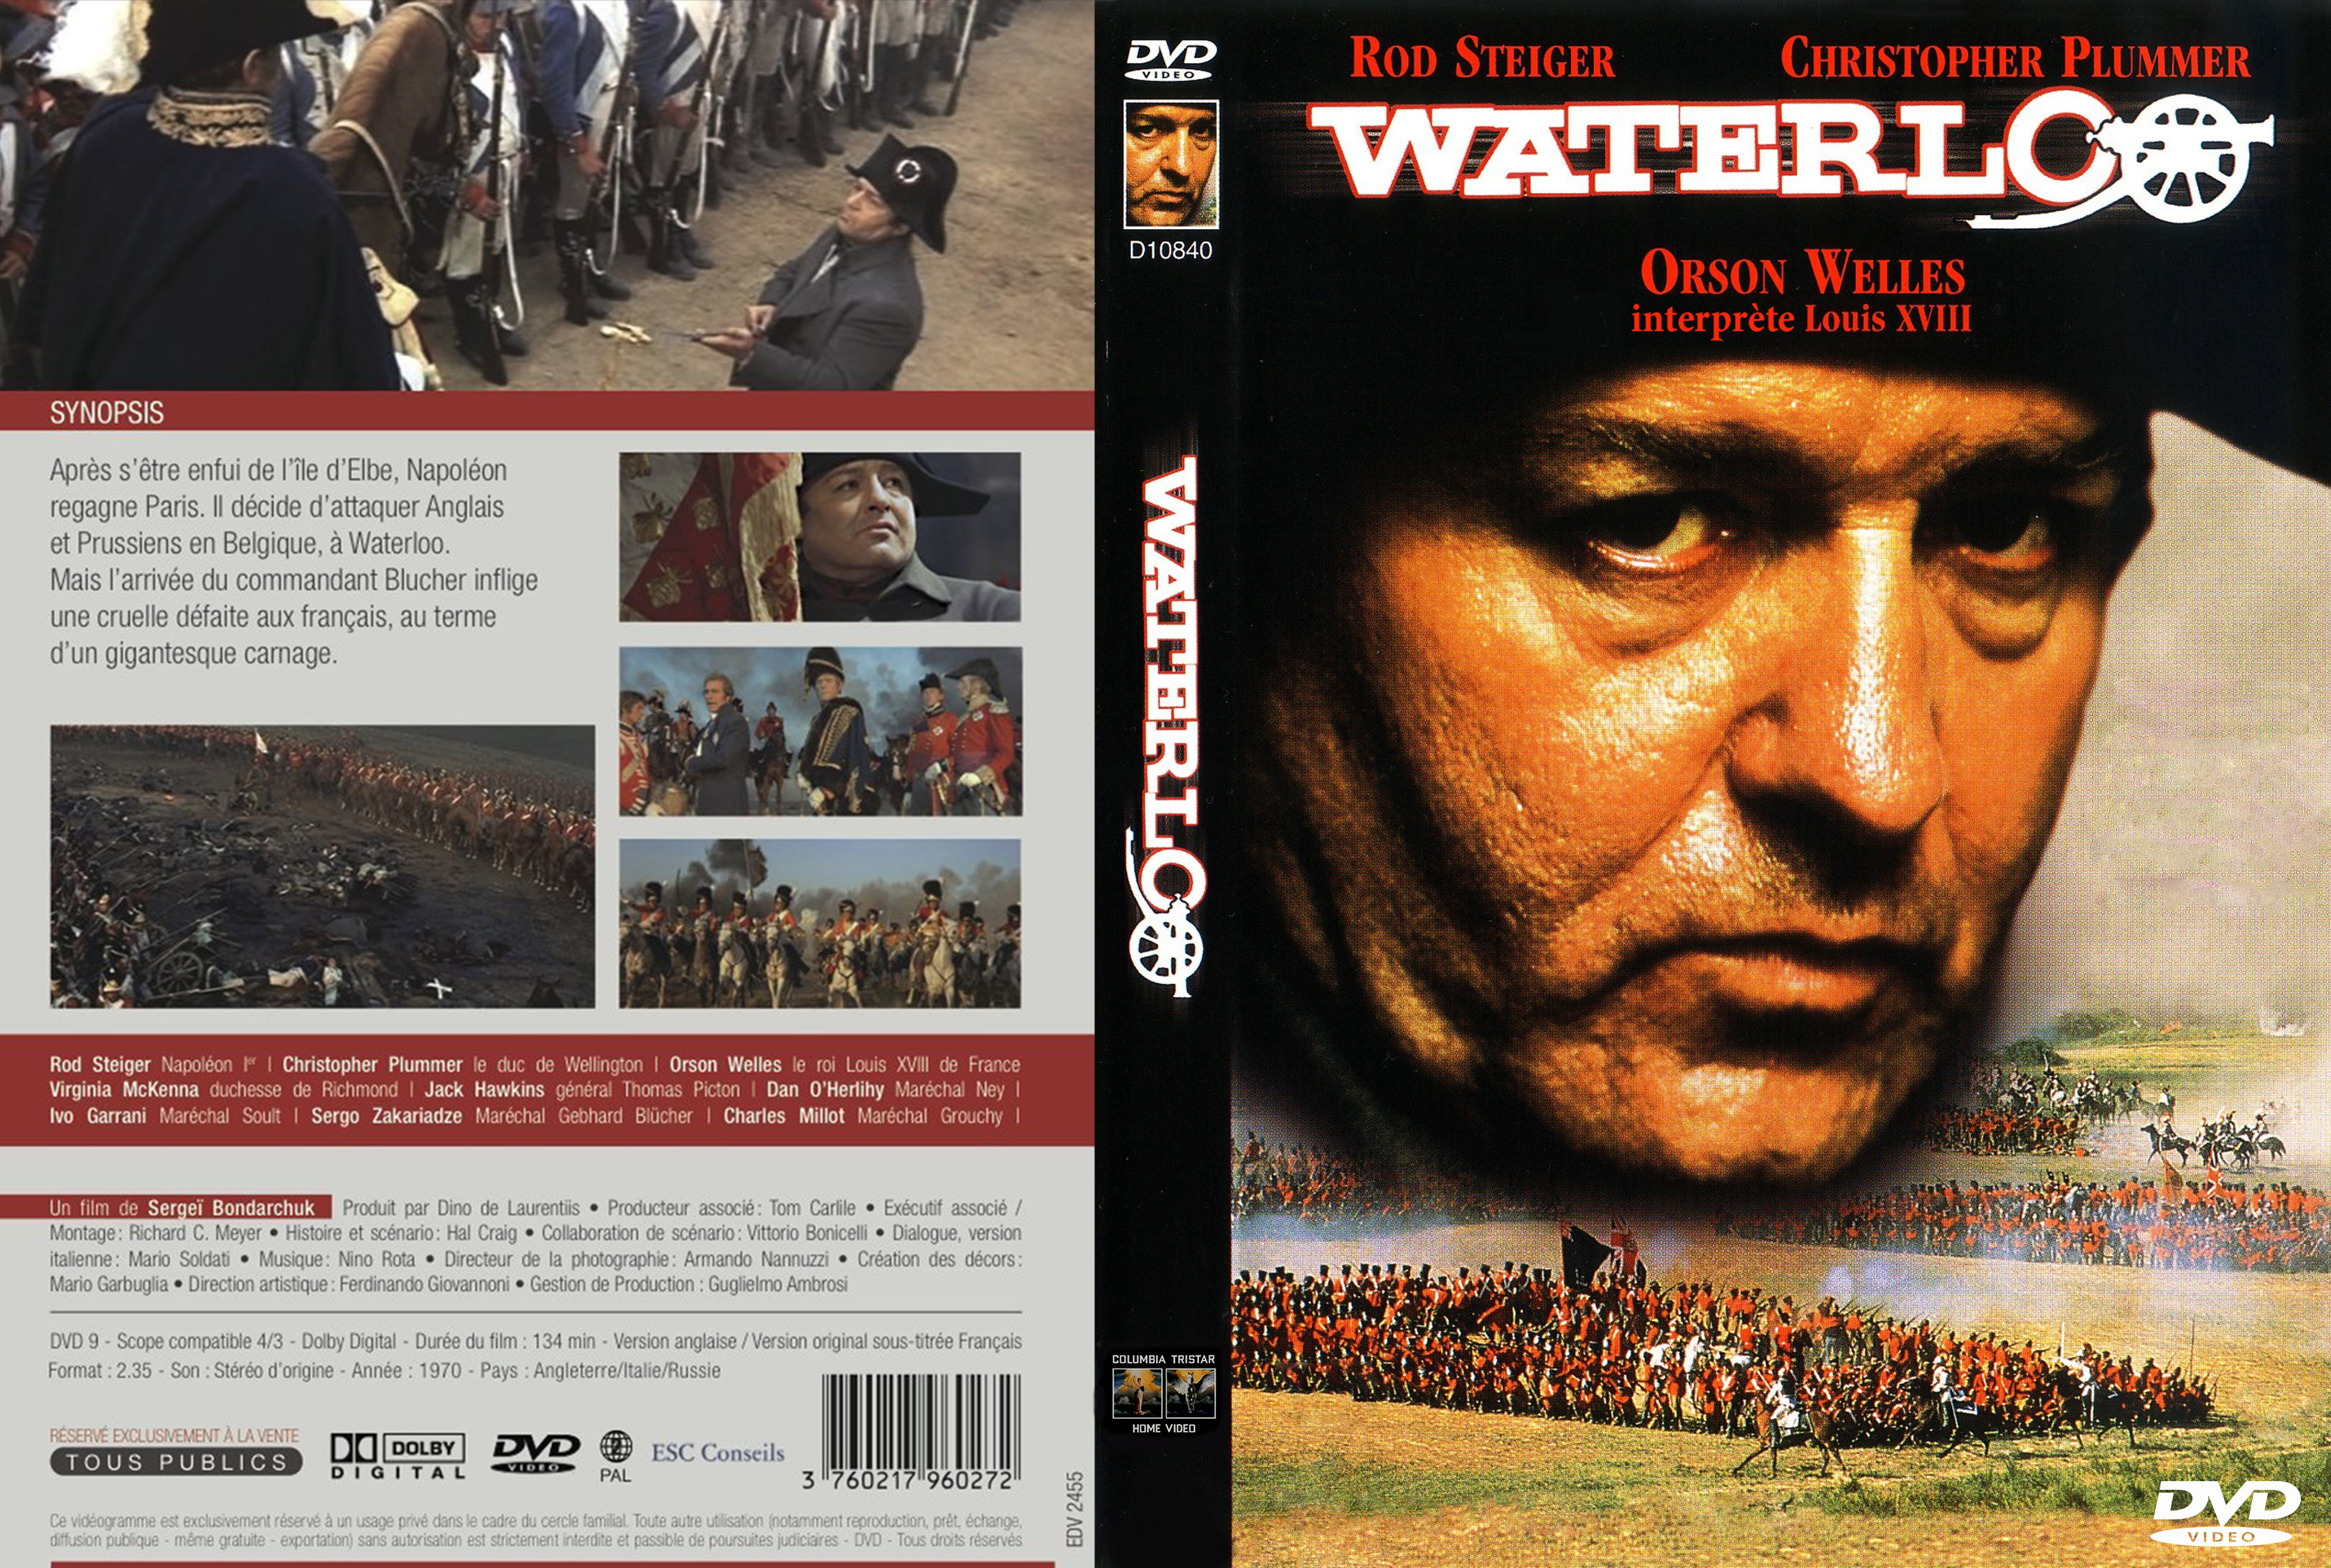 Jaquette DVD Waterloo custom